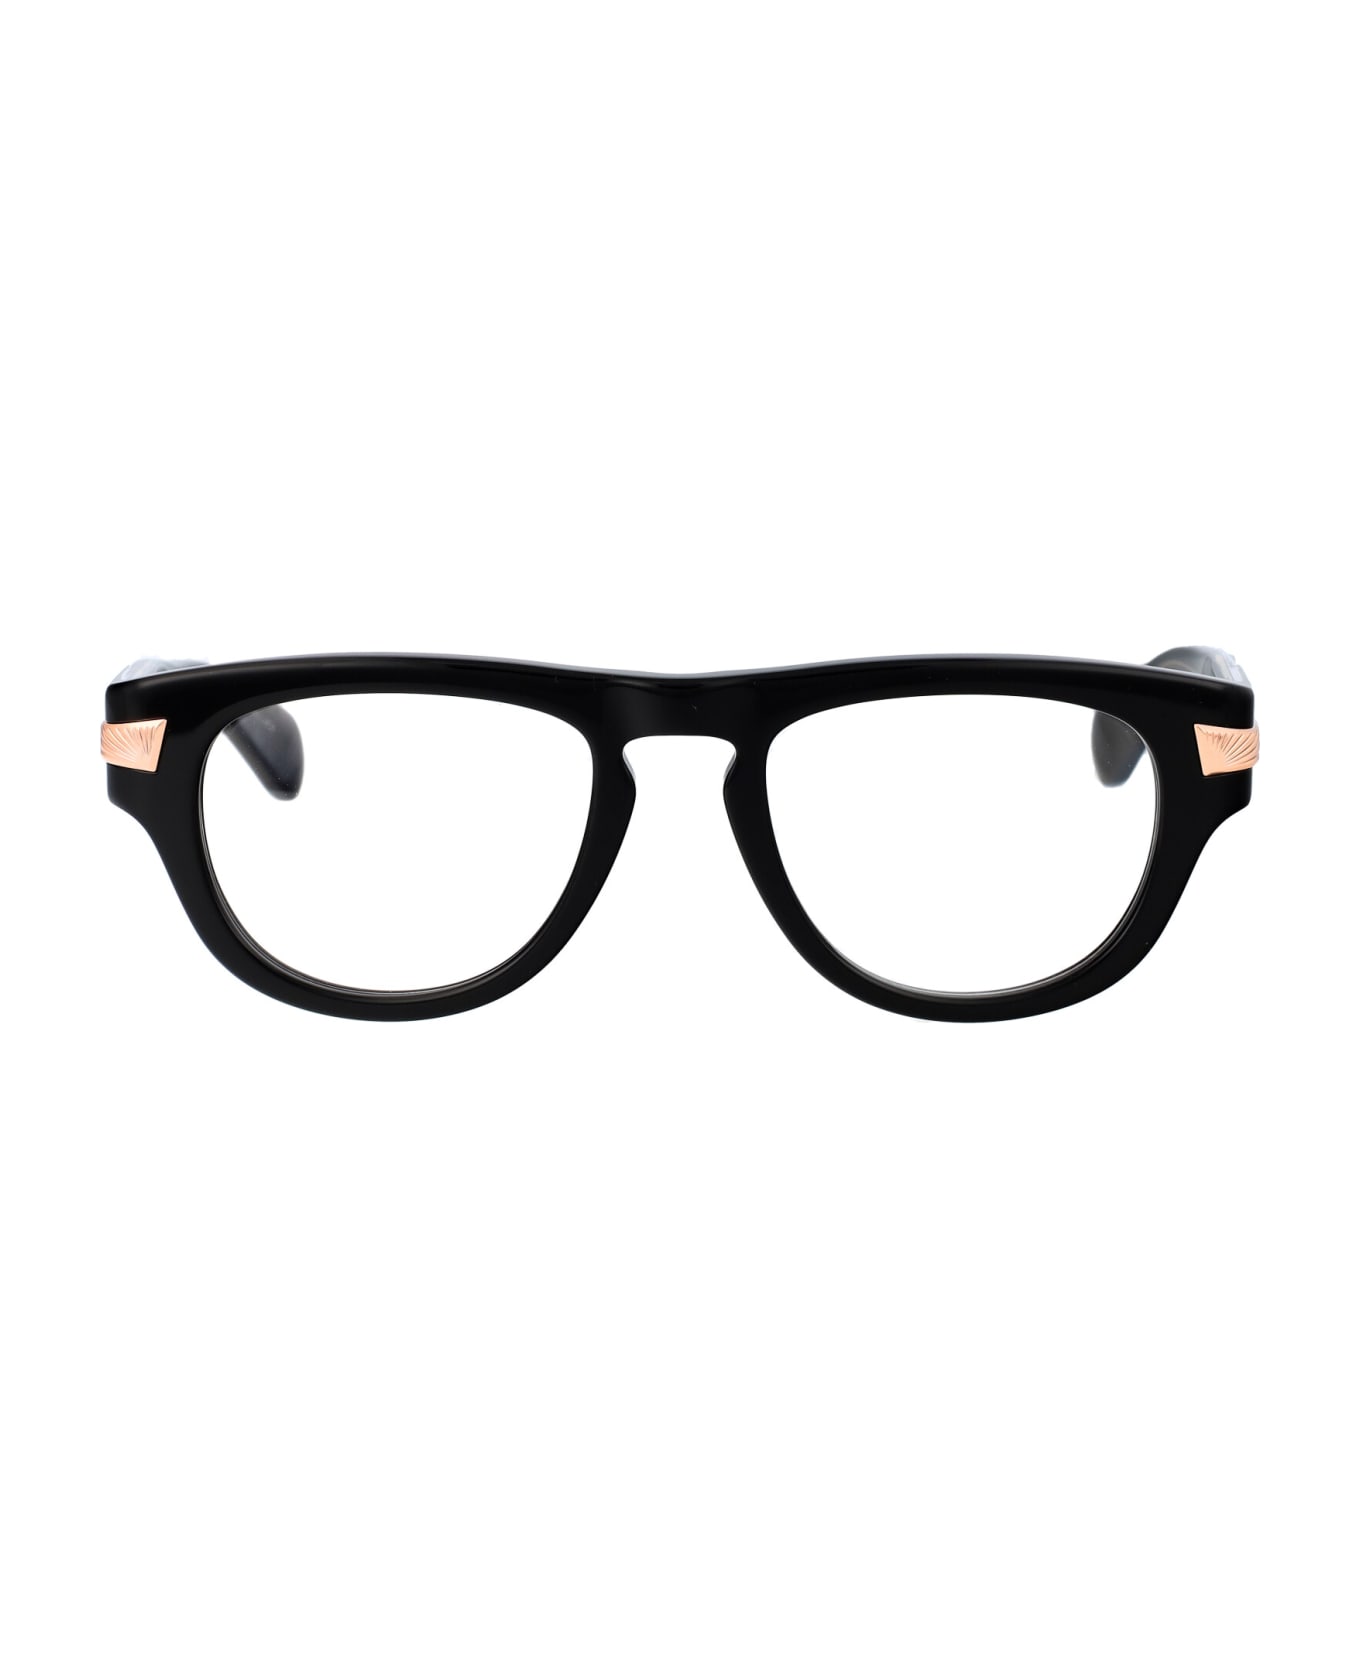 Gucci Eyewear Gg1519o Glasses - 001 BLACK BLACK TRANSPARENT